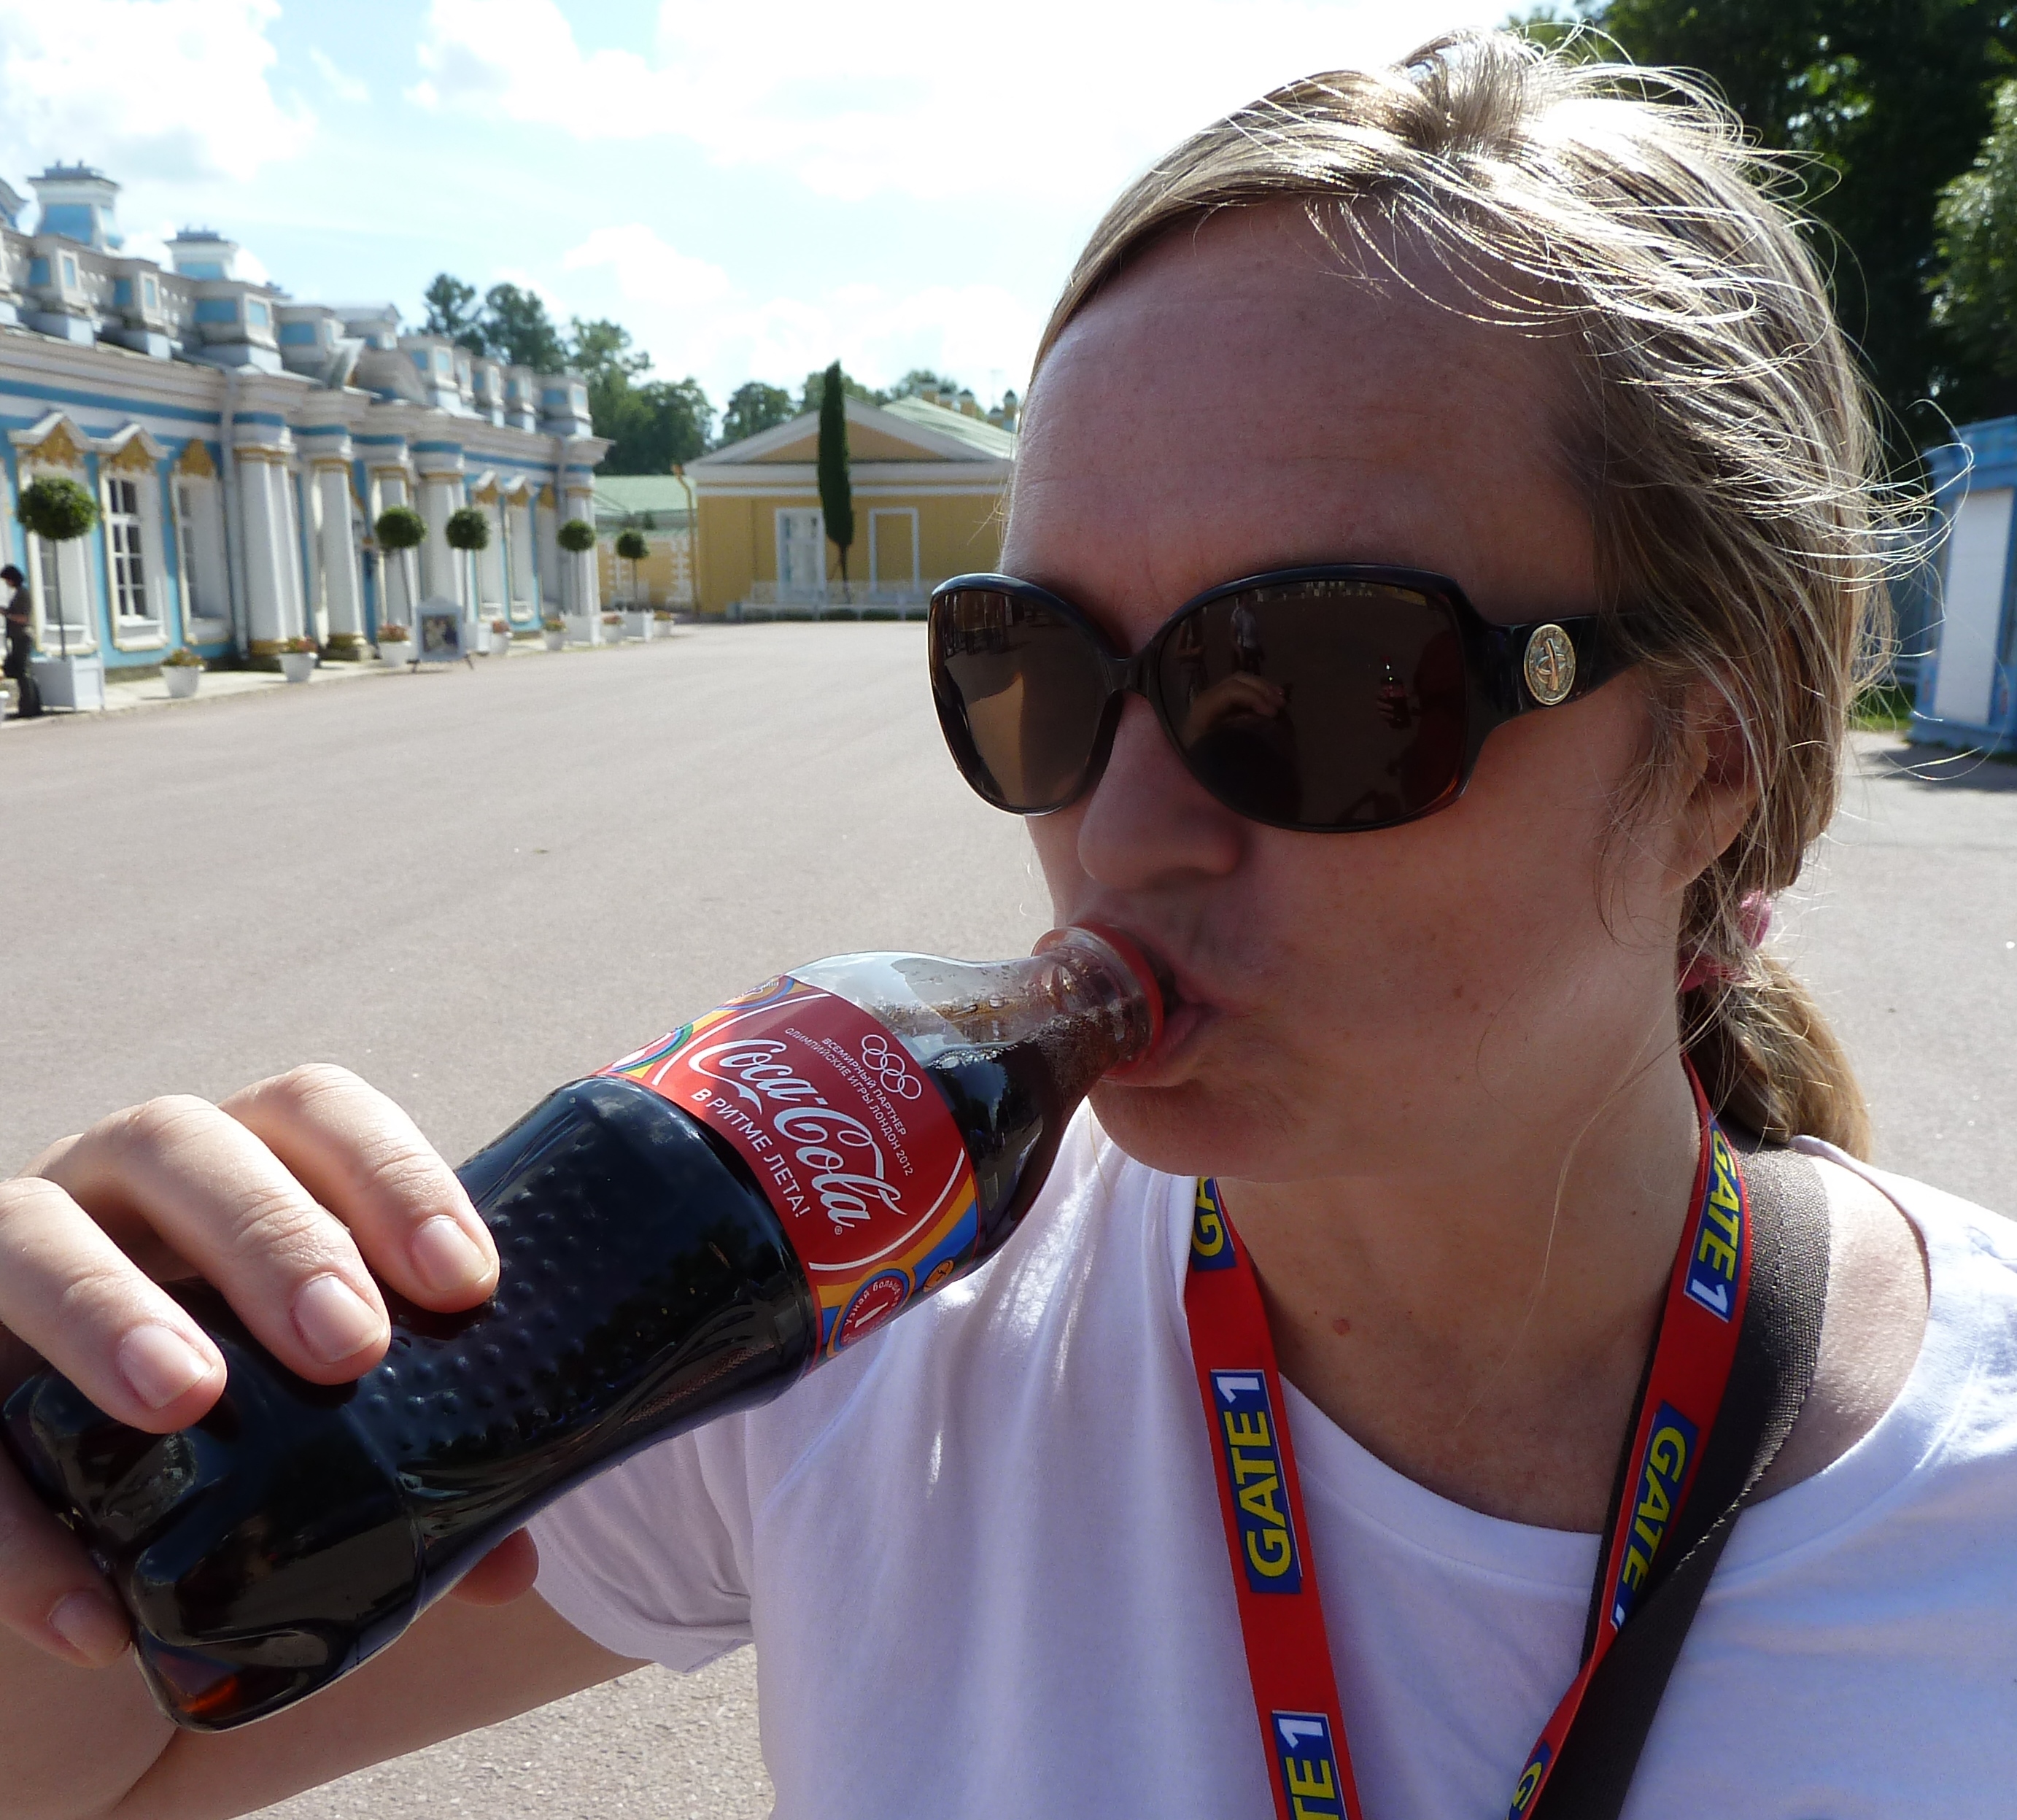 Summer-Palace-Russia-drinking-Coke-credit-M-Ciavardini.jpg